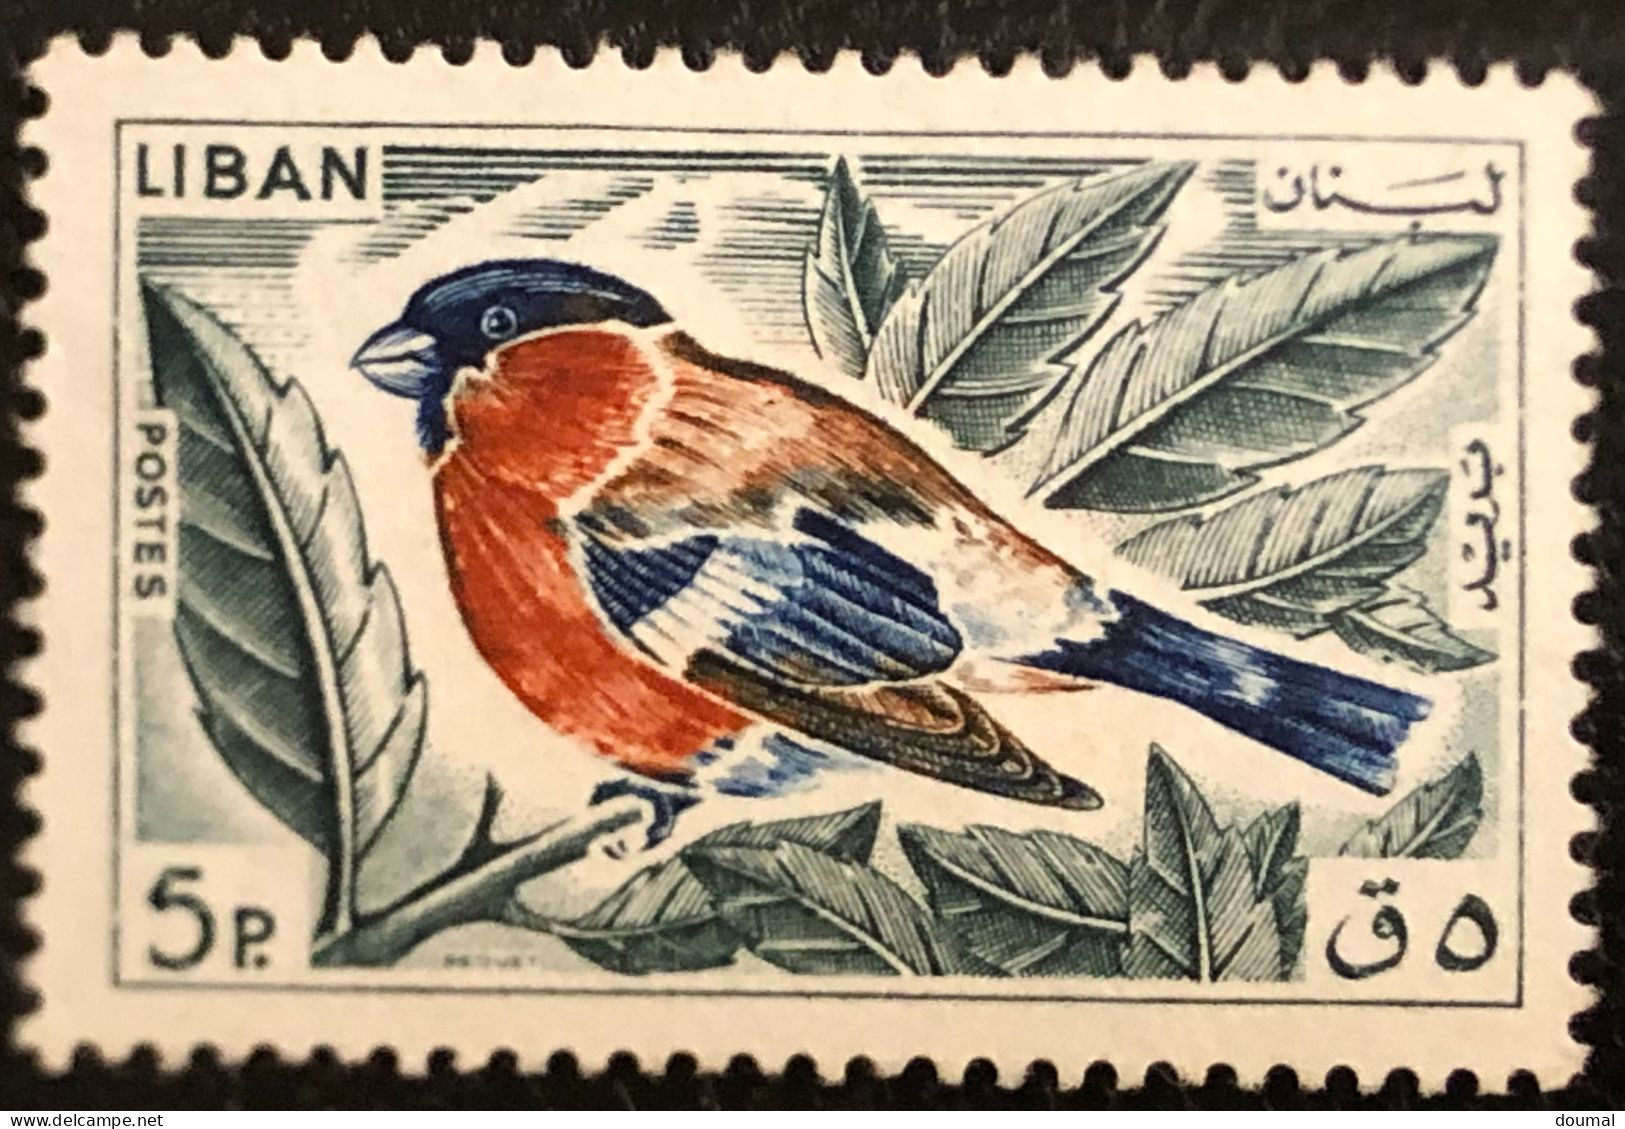 Lebanon Bird Stamps From Lebanon 5 Piastres Year 1950 - Lebanon